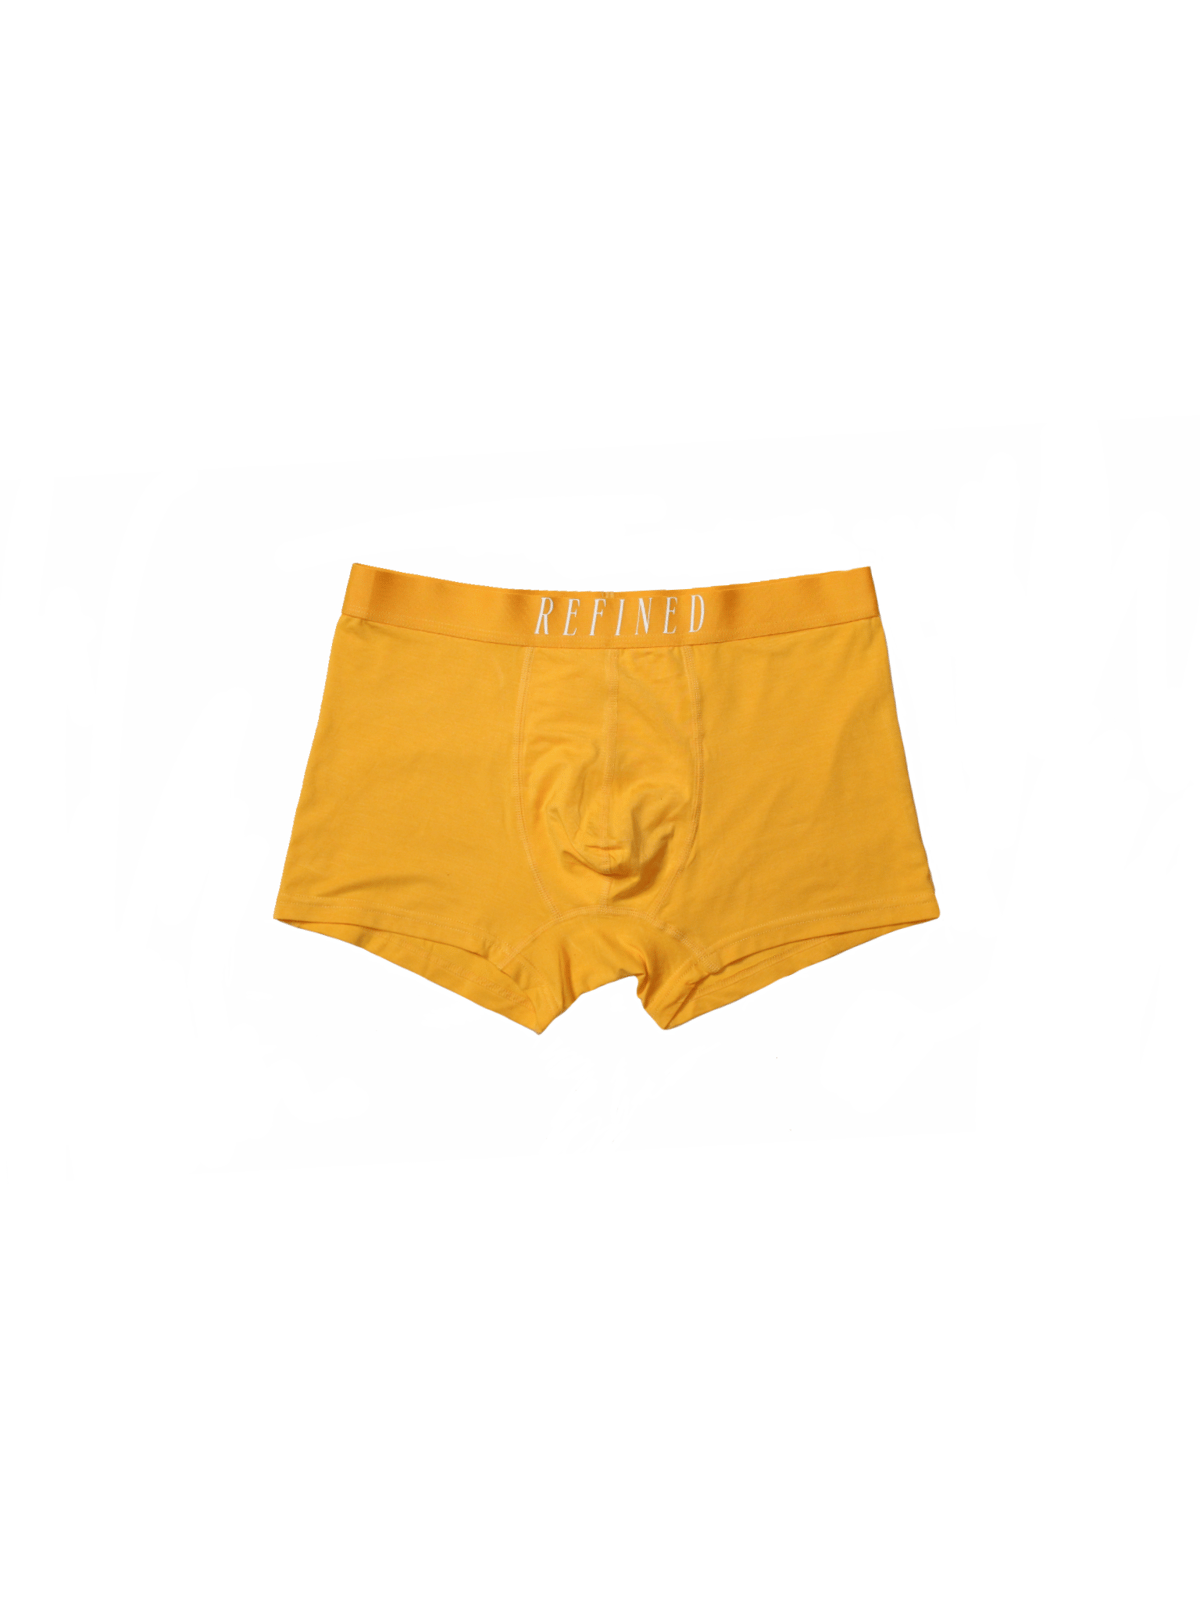 Image of Refined Premium underwear (yellow)